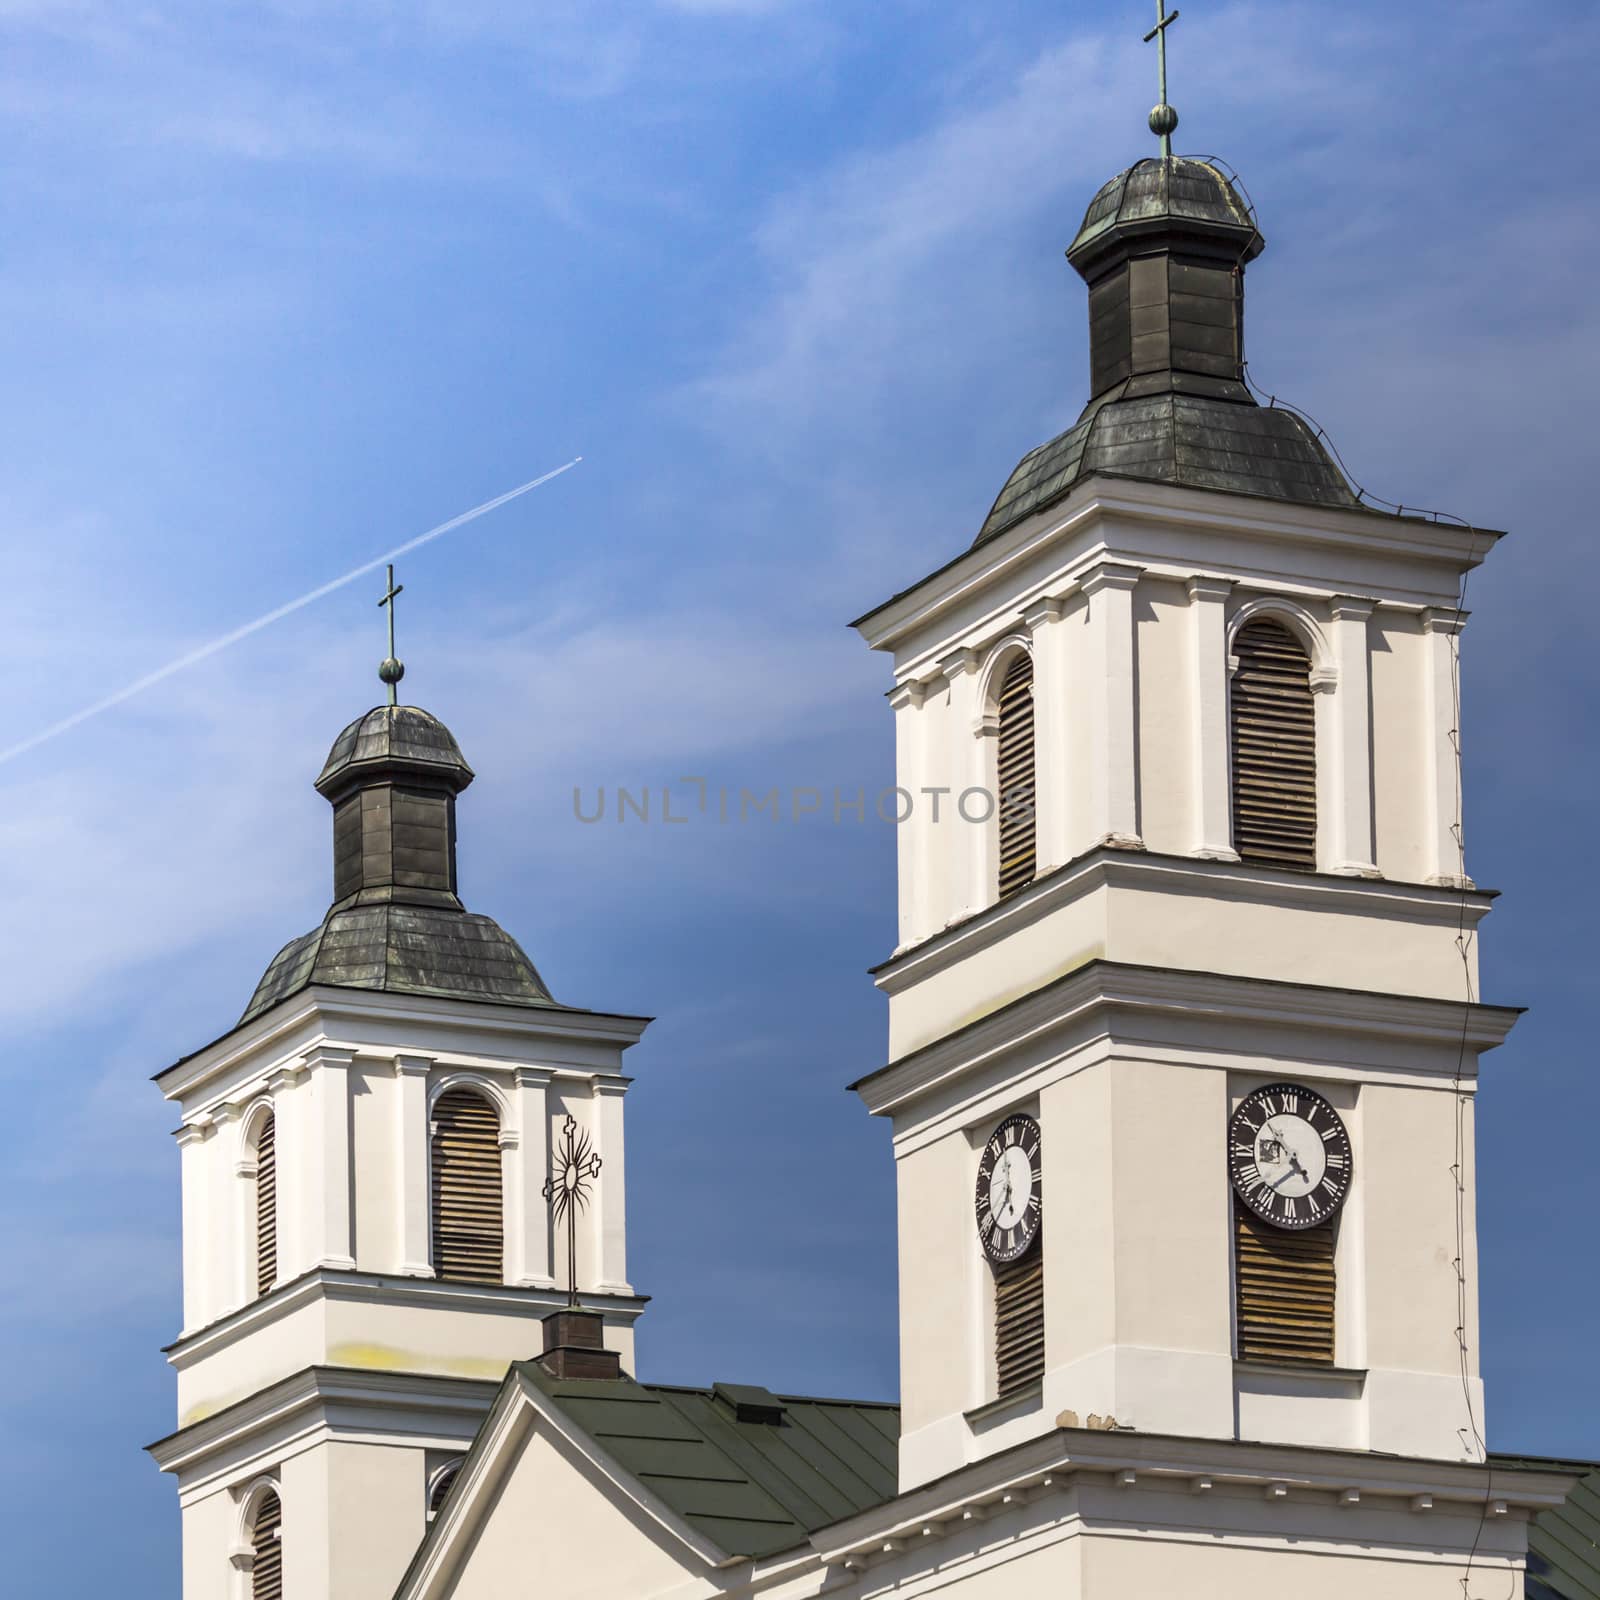 Church of St. Alexander in Suwalki. Poland